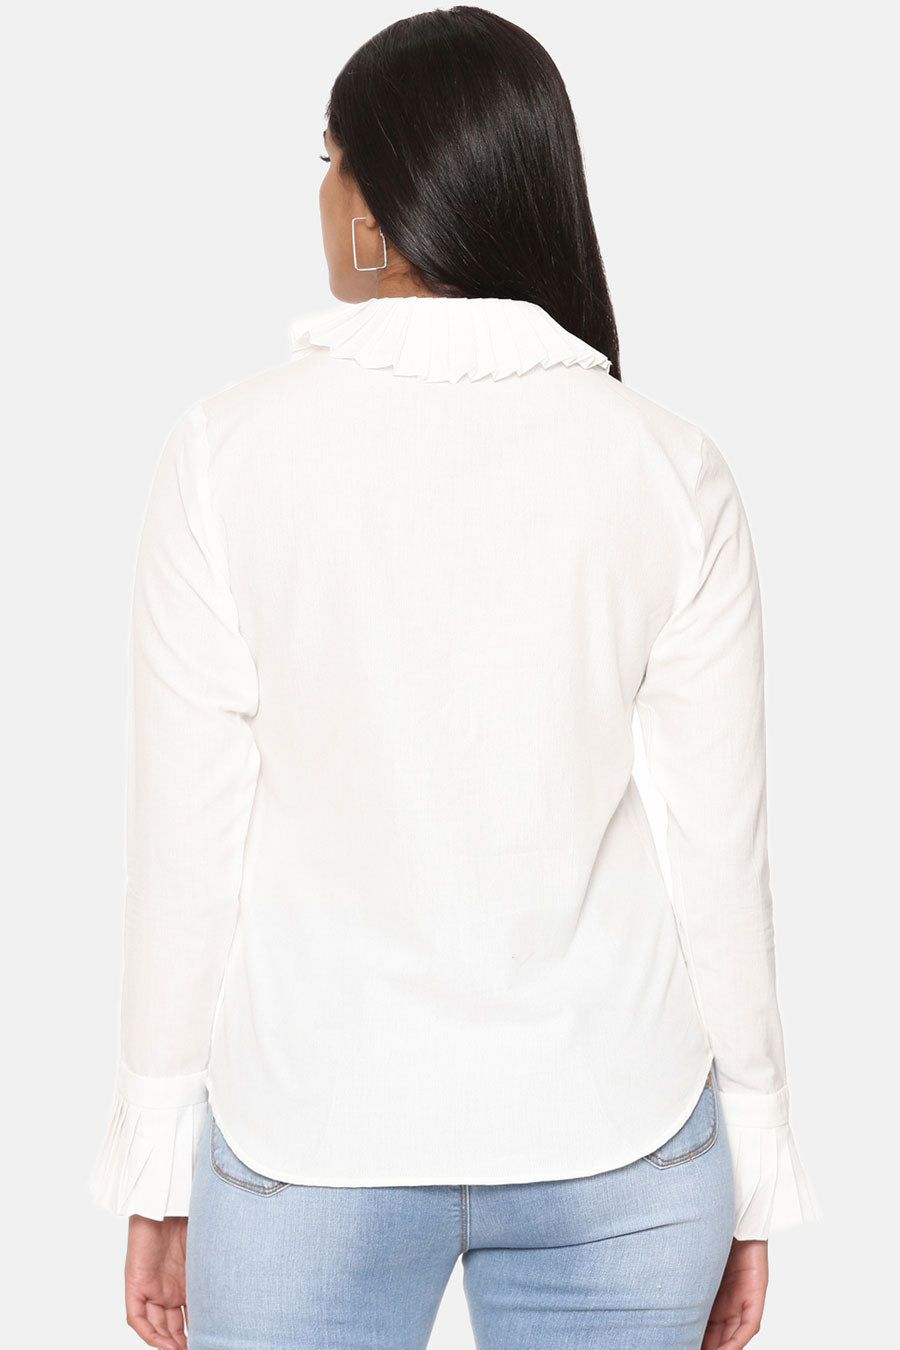 White Pleated Cotton Shirt